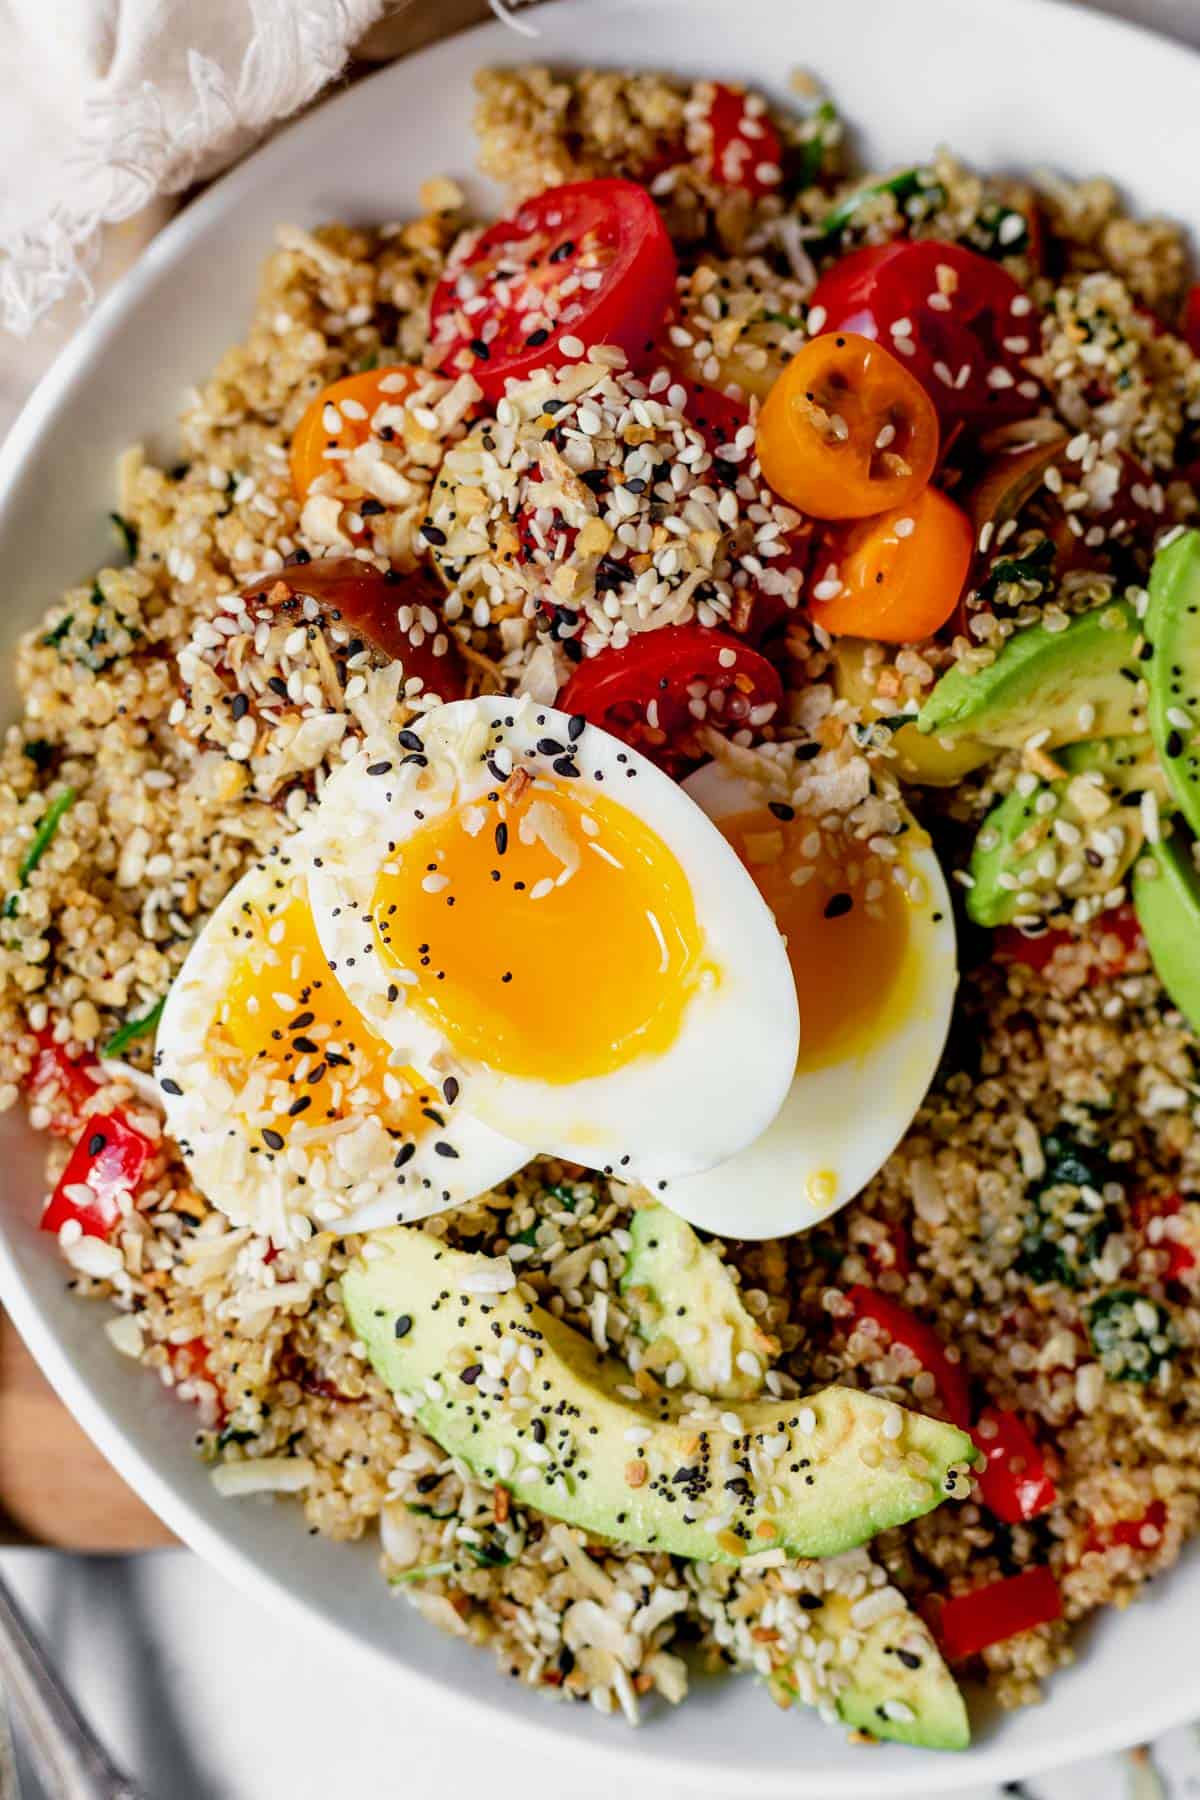 quinoa in a bowl with suateed veggies, avocado, tomato and eggs